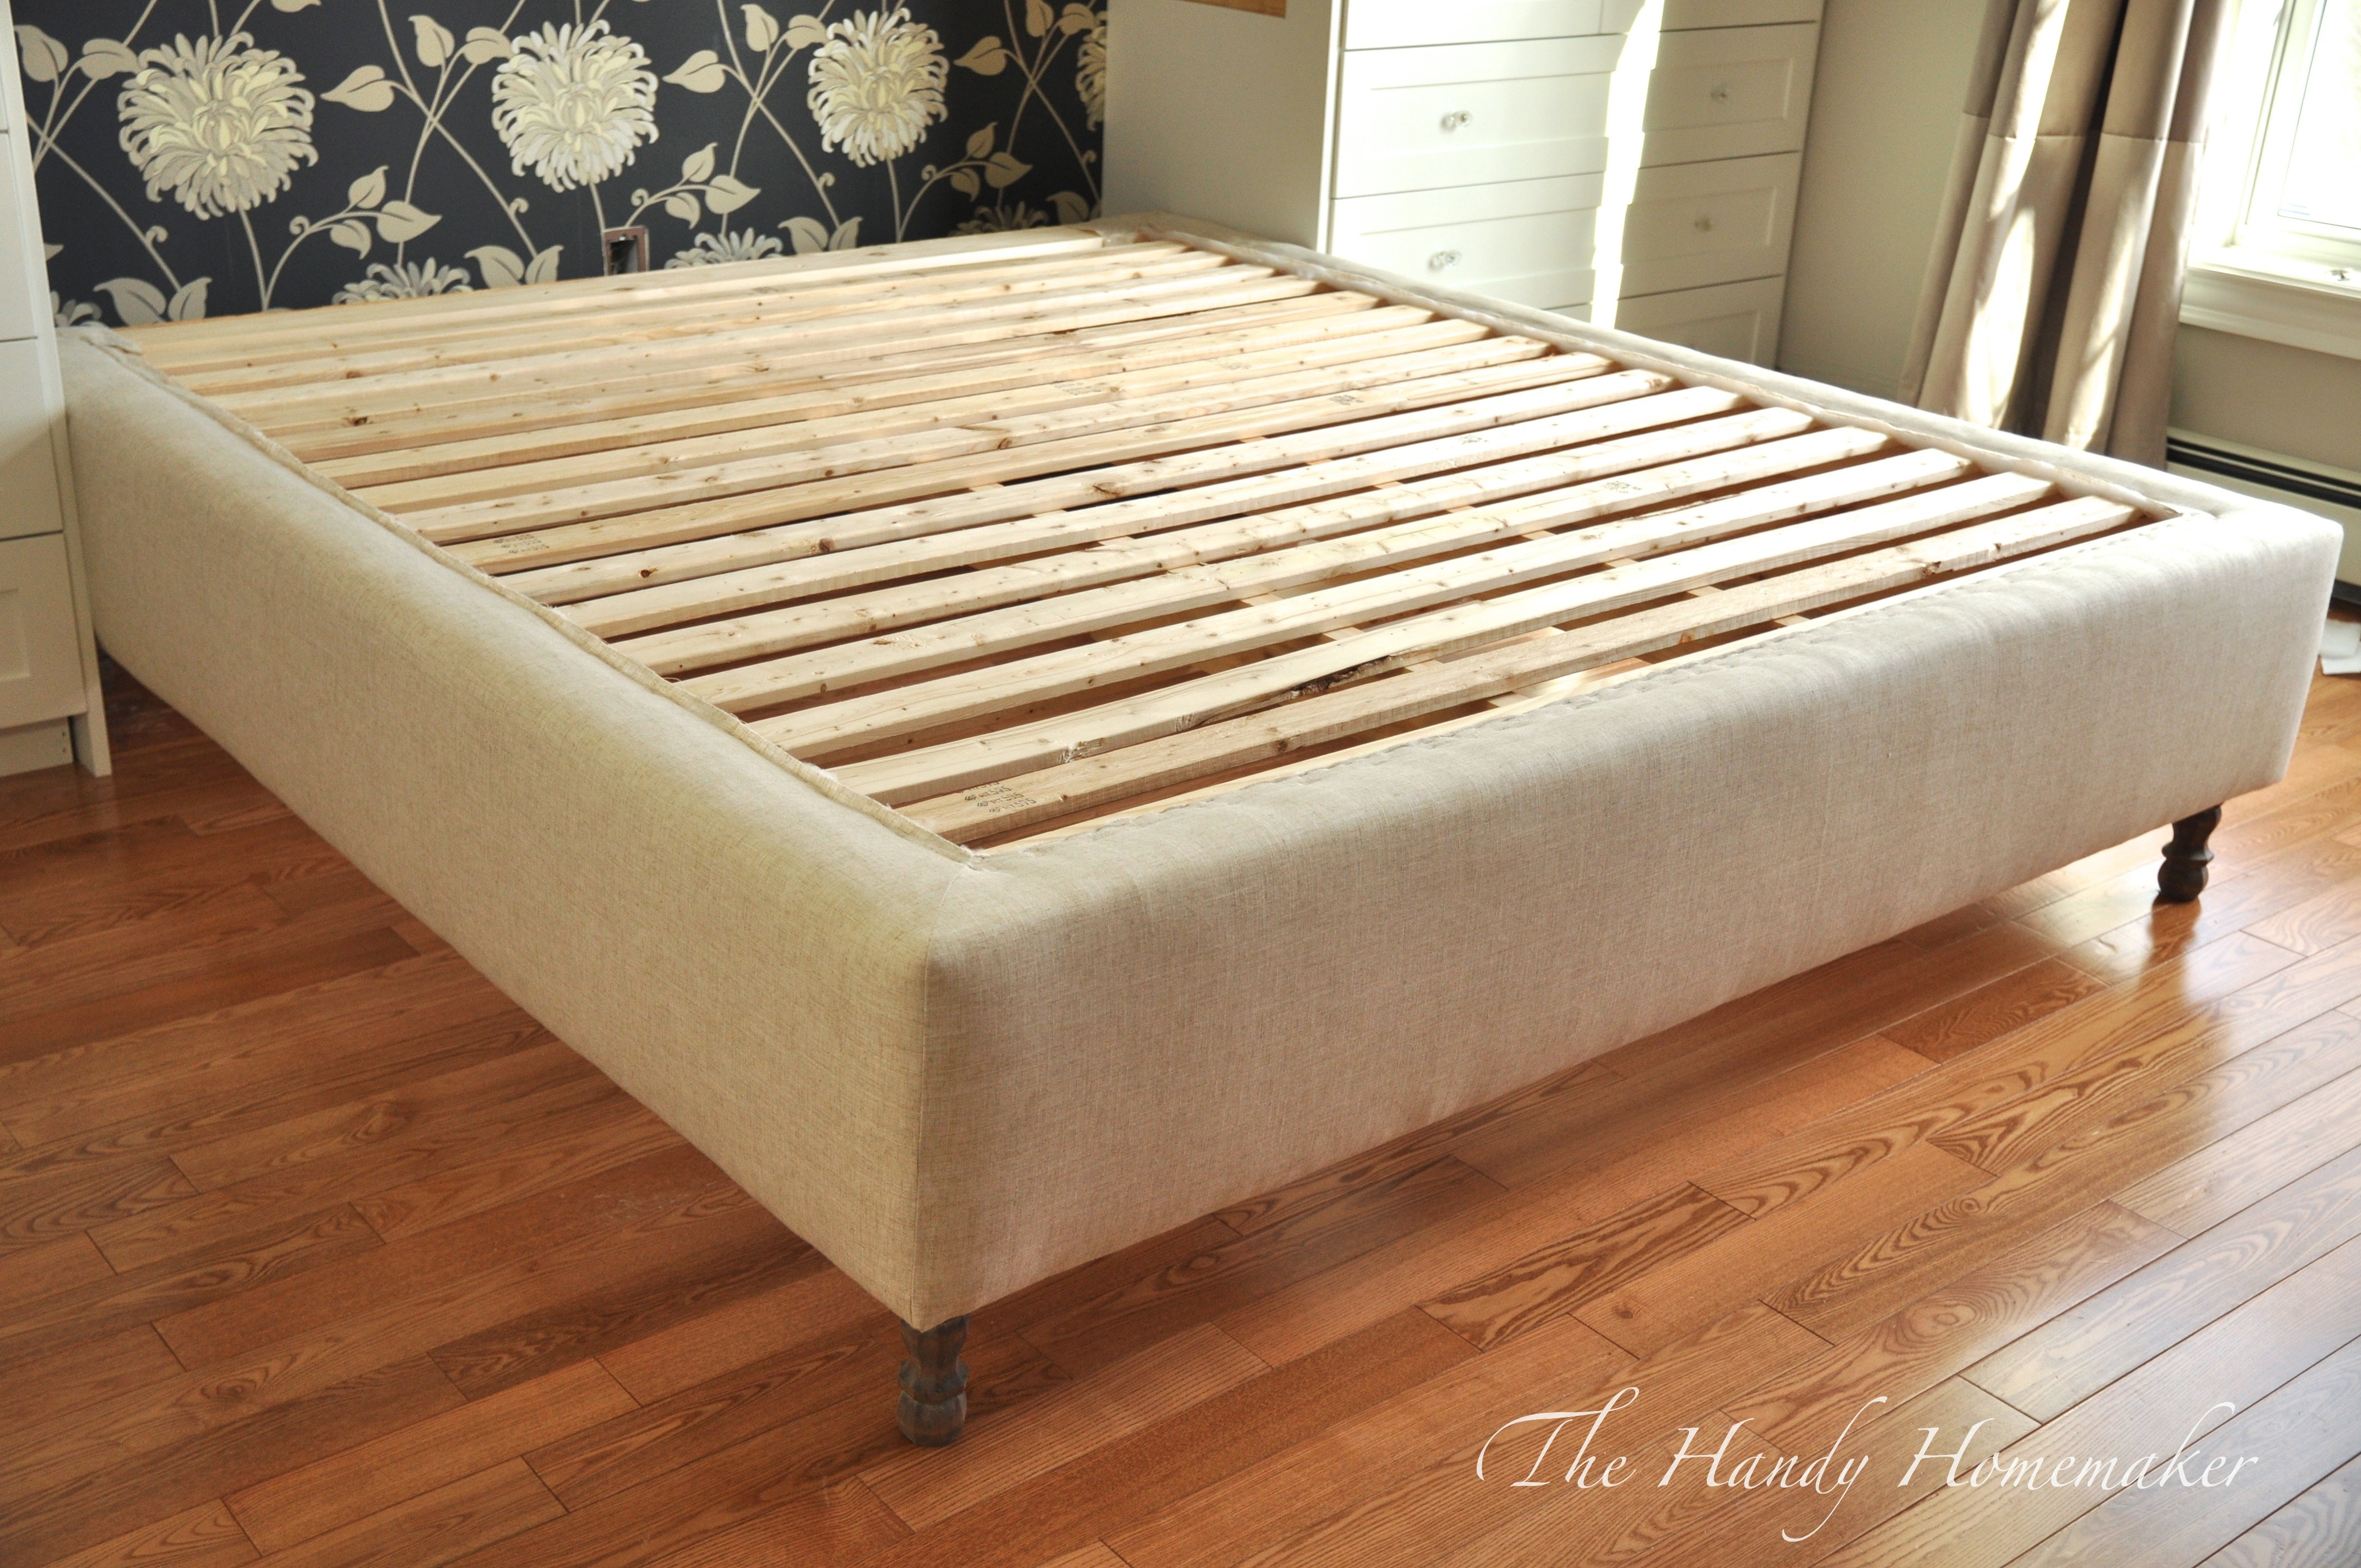 Best ideas about DIY Upholstered Bed Frame
. Save or Pin Upholstered Bed Frame DIY Part 1 Now.